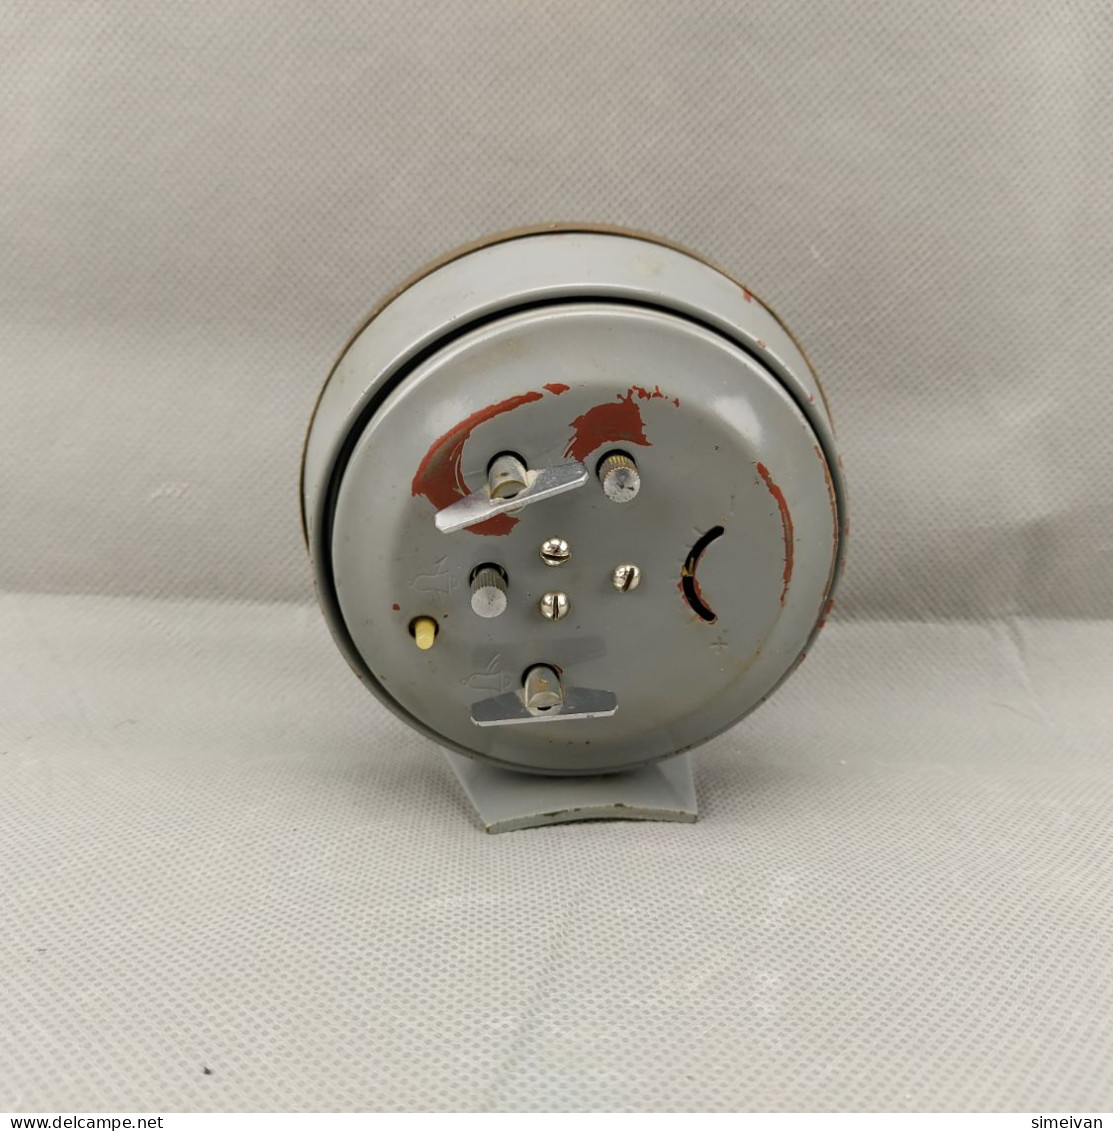 Vintage EARLY CHINA MECHANICAL DESKTOP ALARM CLOCK #0688 - Alarm Clocks